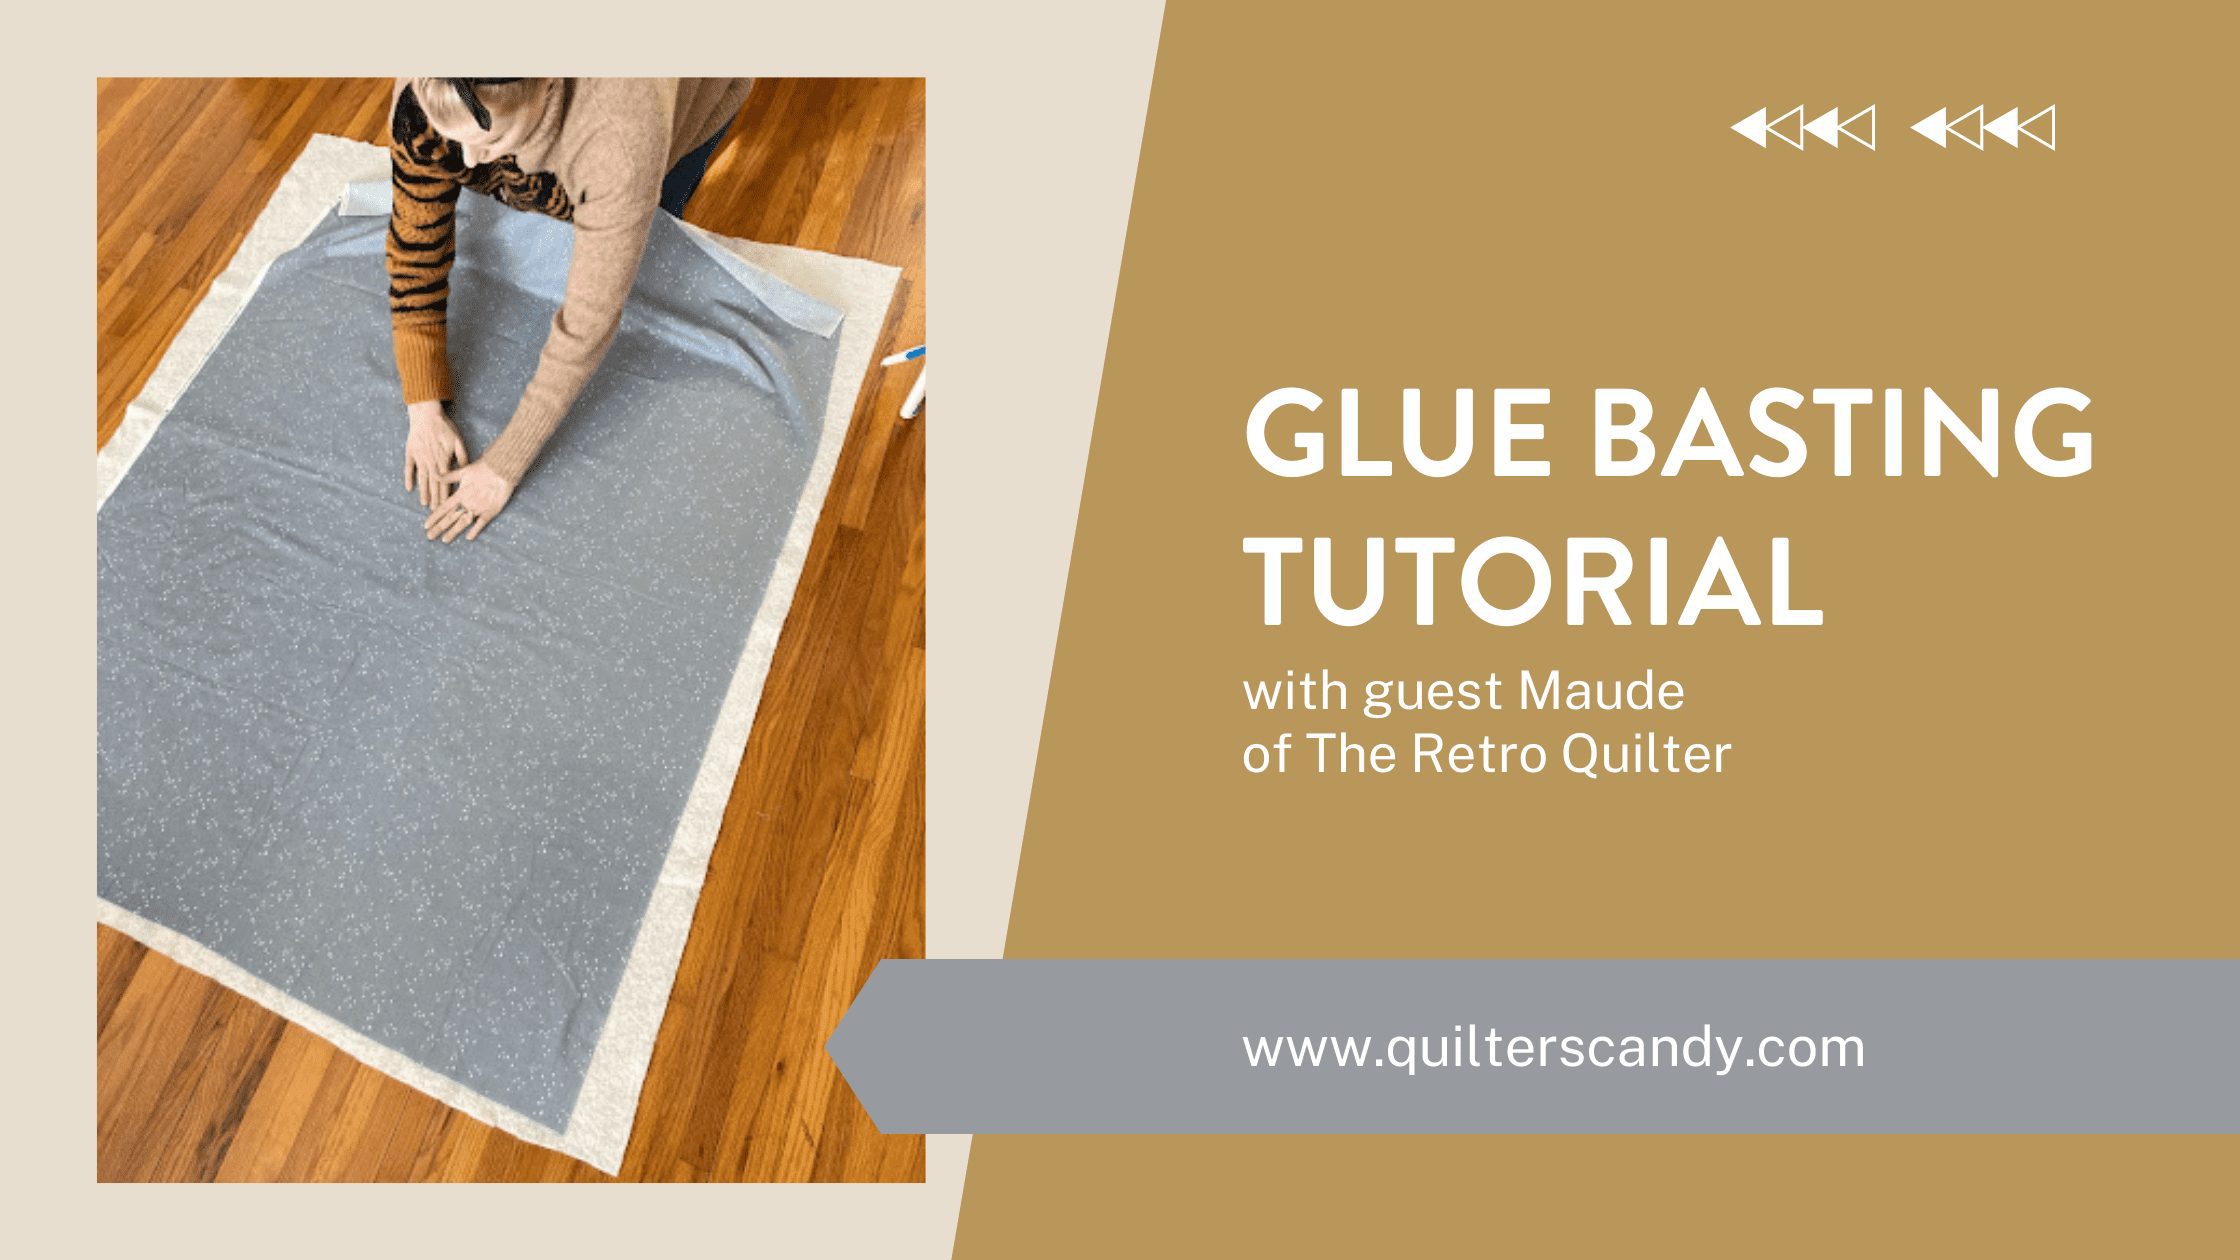 Glue Basting tutorial